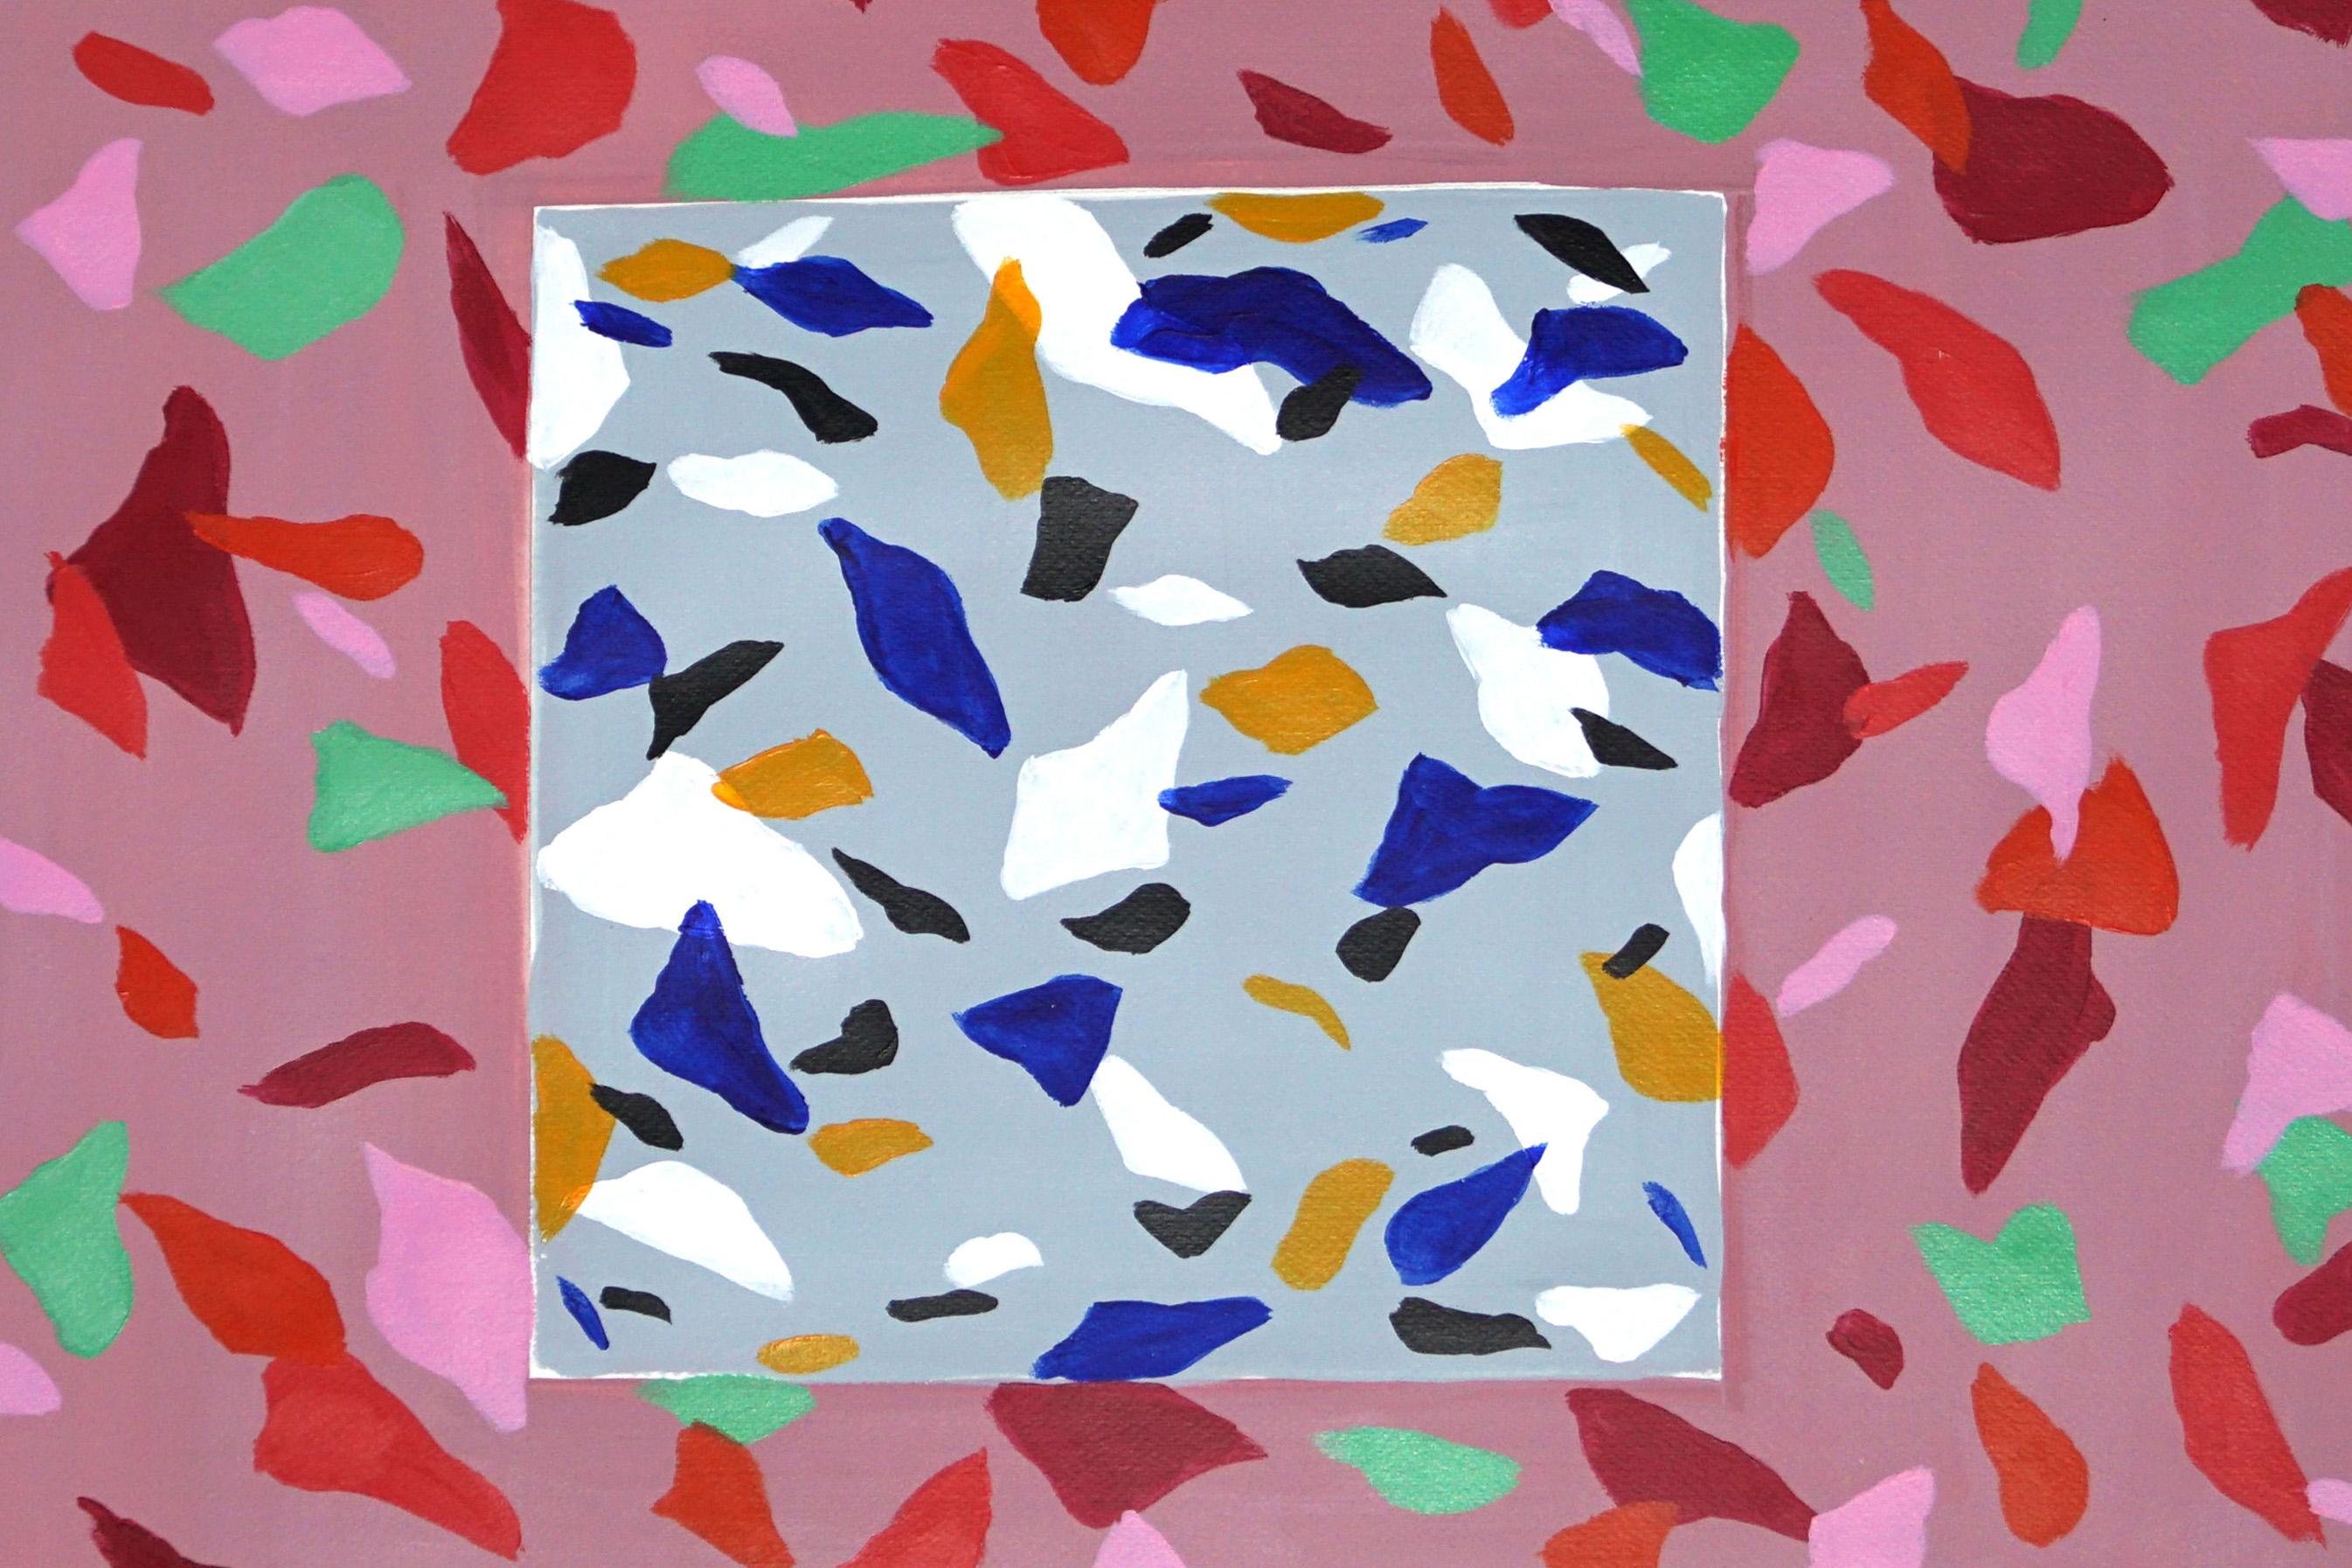 Graue graue Kachel über Erdbeerfeld, süße Farbtöne Terrazzo-Kacheln, rote Memphis-Formen  (Pink), Still-Life Painting, von Natalia Roman